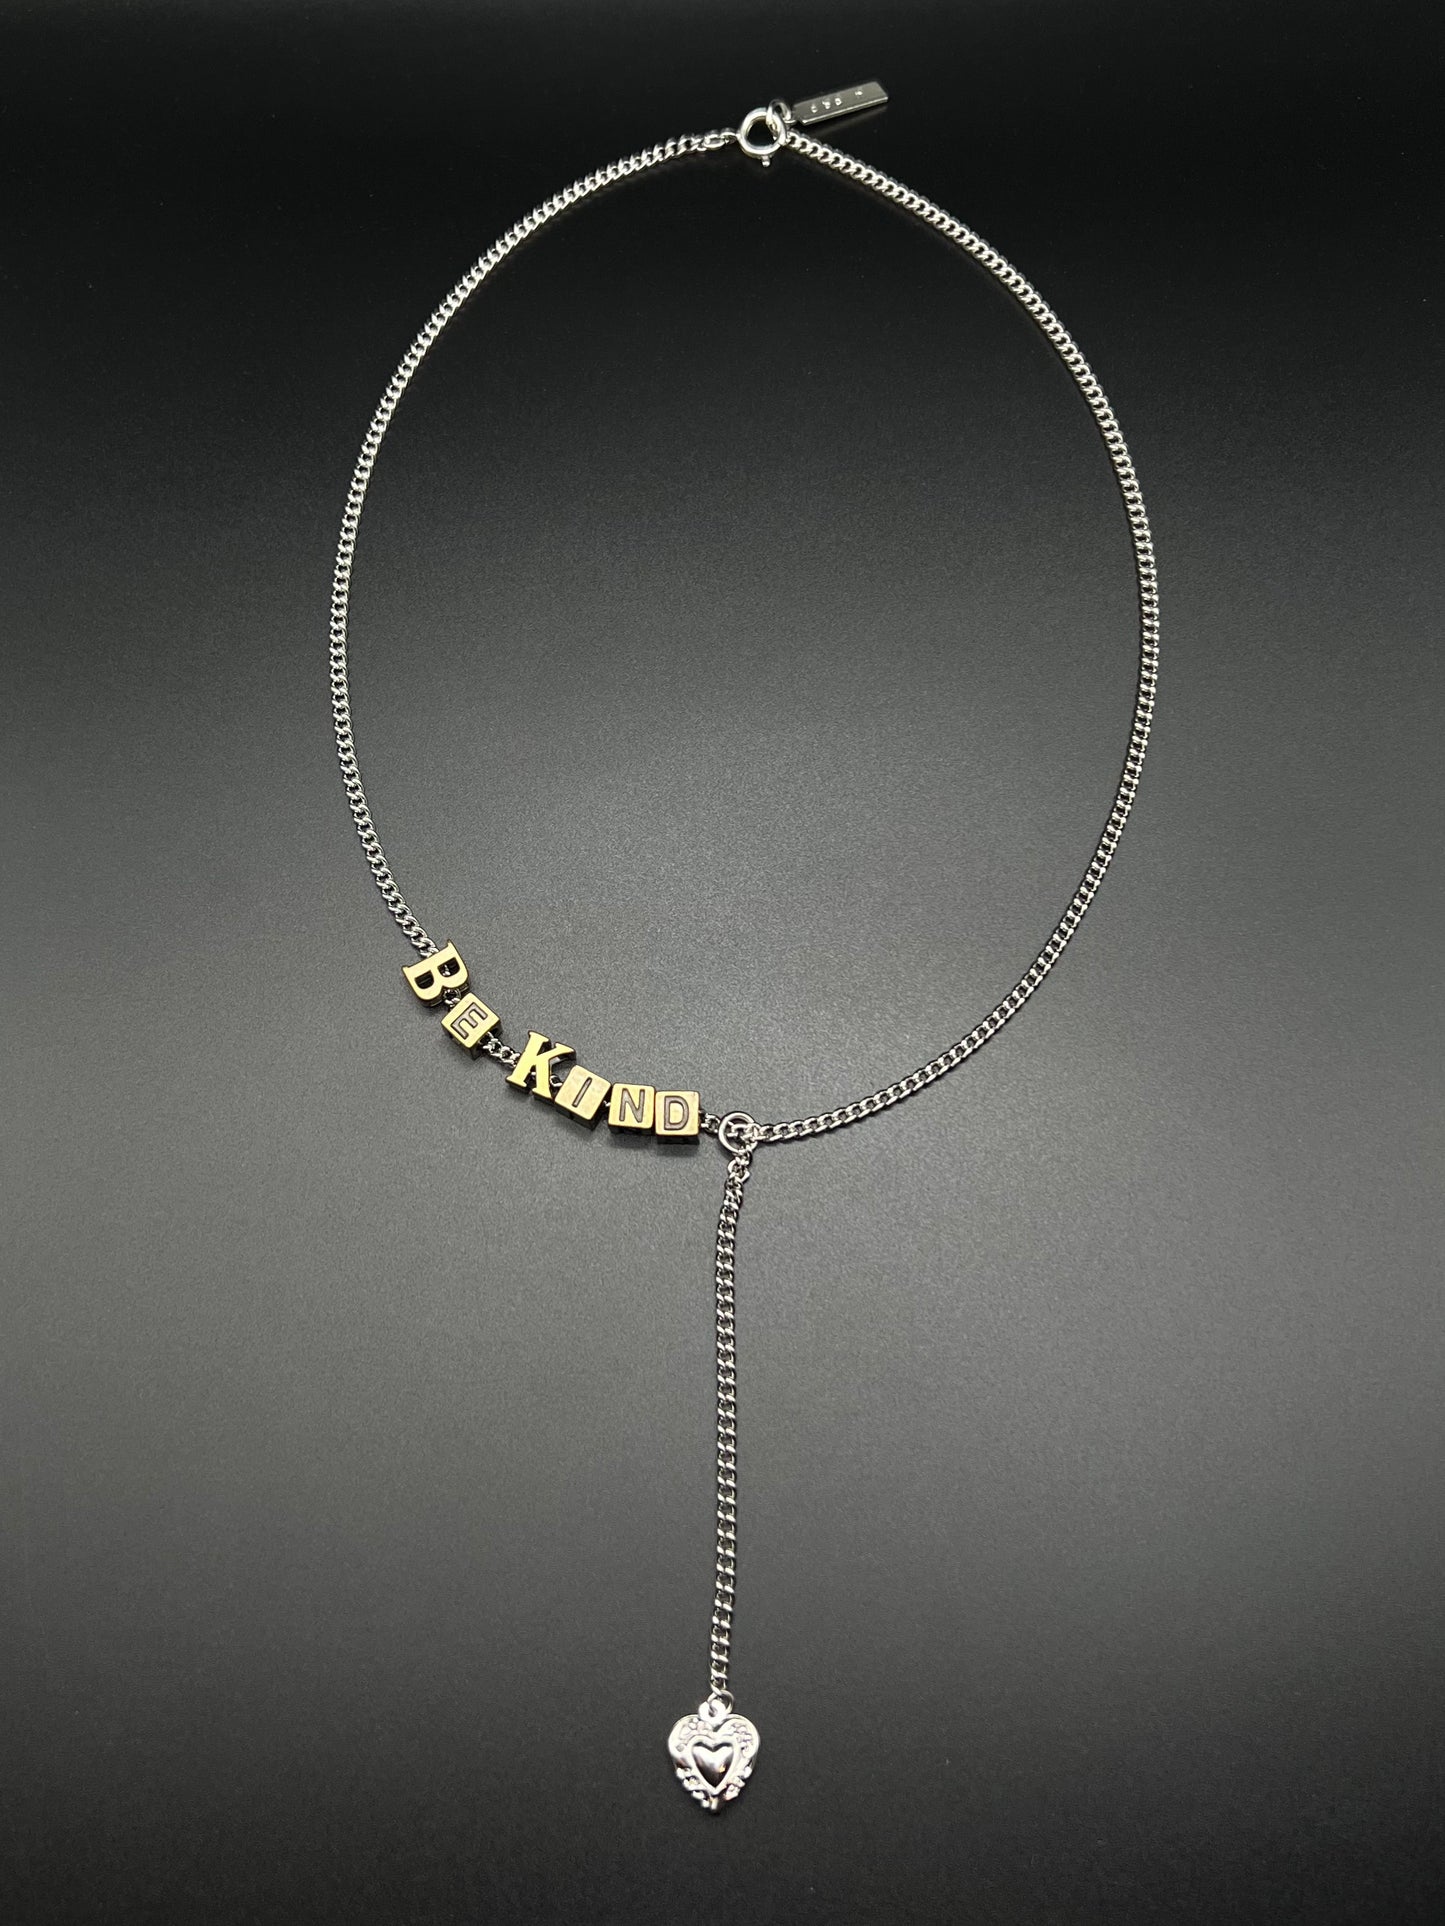 "BEKIND" necklace